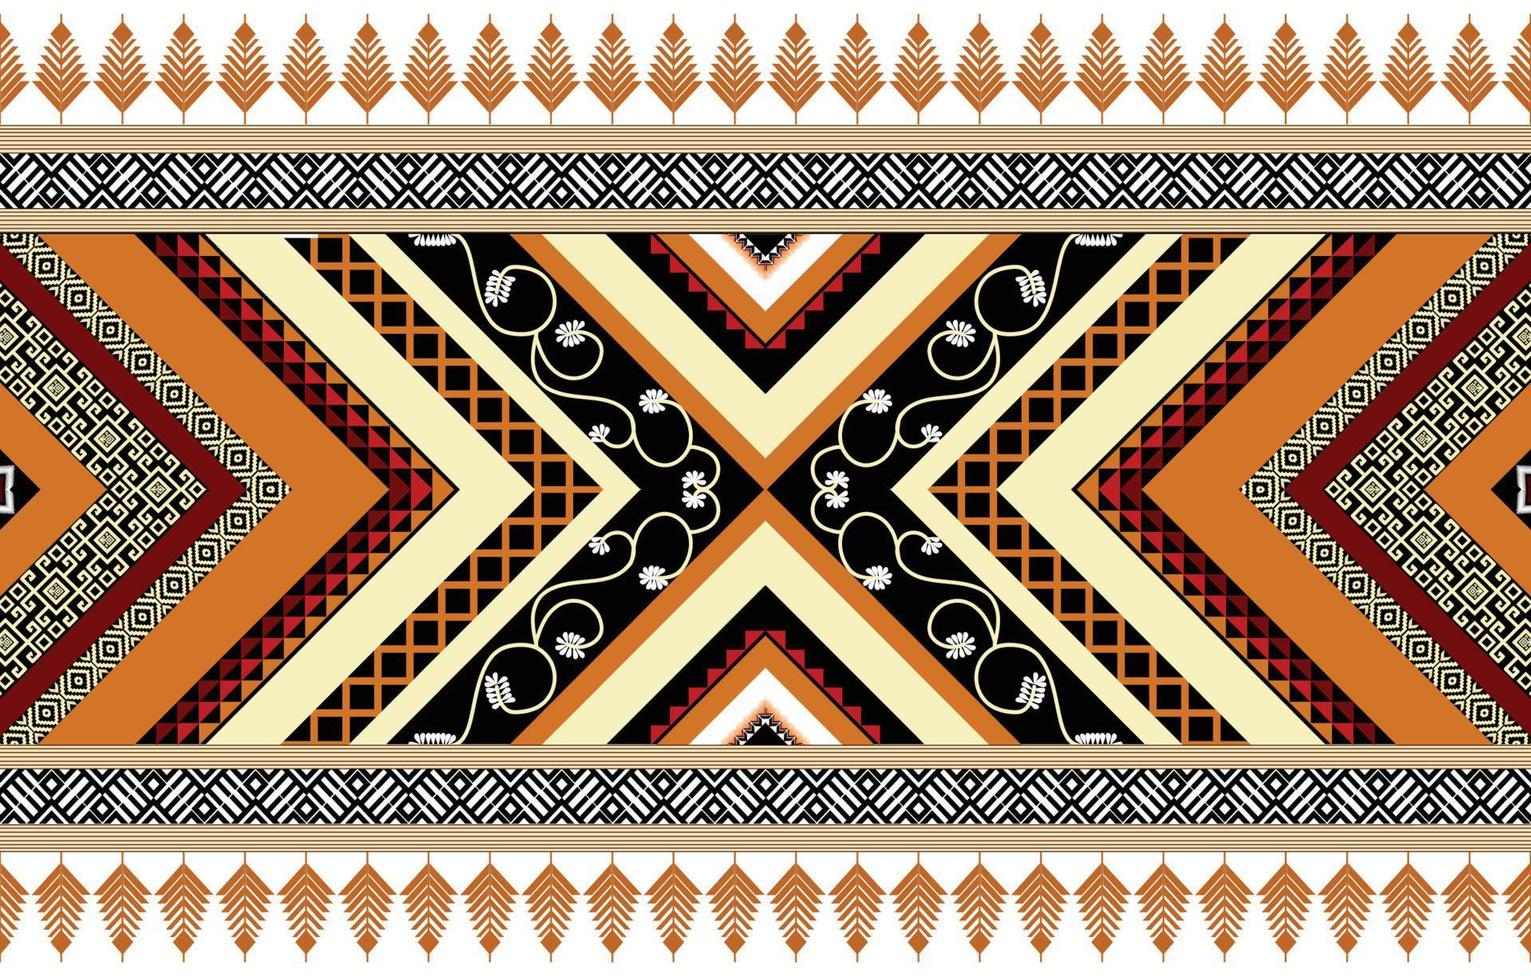 kleurrijk meetkundig etnisch patroon. oosters, westers, azteeks, tribal traditioneel. naadloos patroon. kleding stof, tegel, achtergrond, tapijt, behang, kleding, sarong, inpakken, batik, stof, vector patroon.